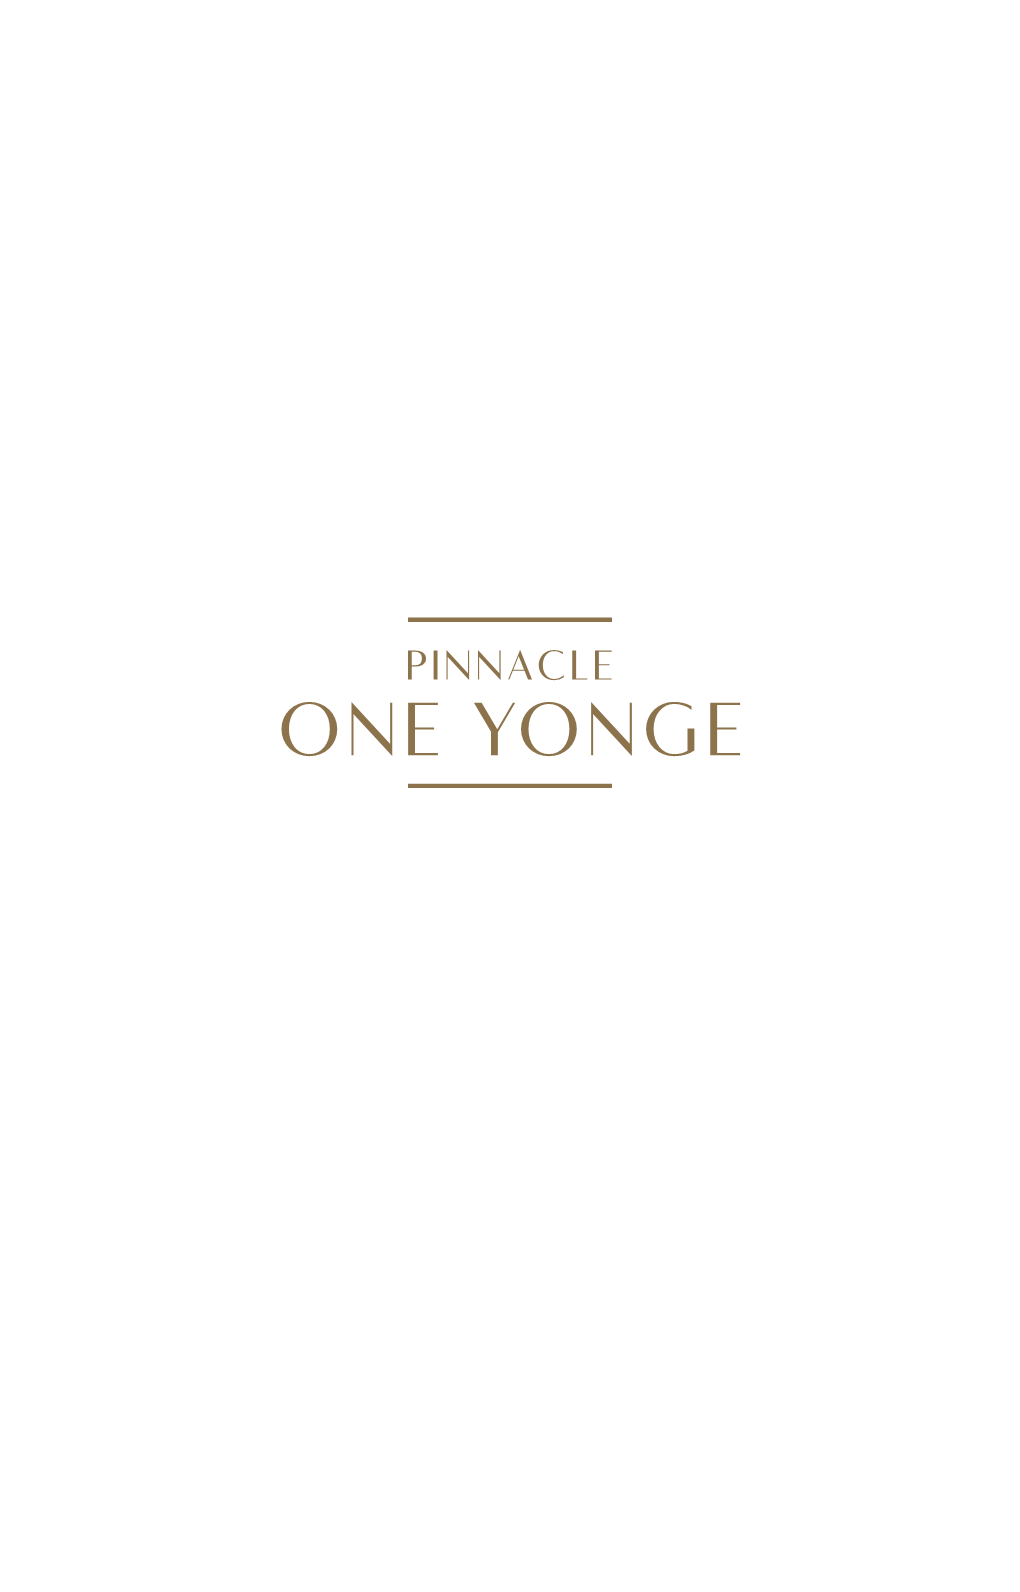 Pinnacle One Yonge Your Iconic Address